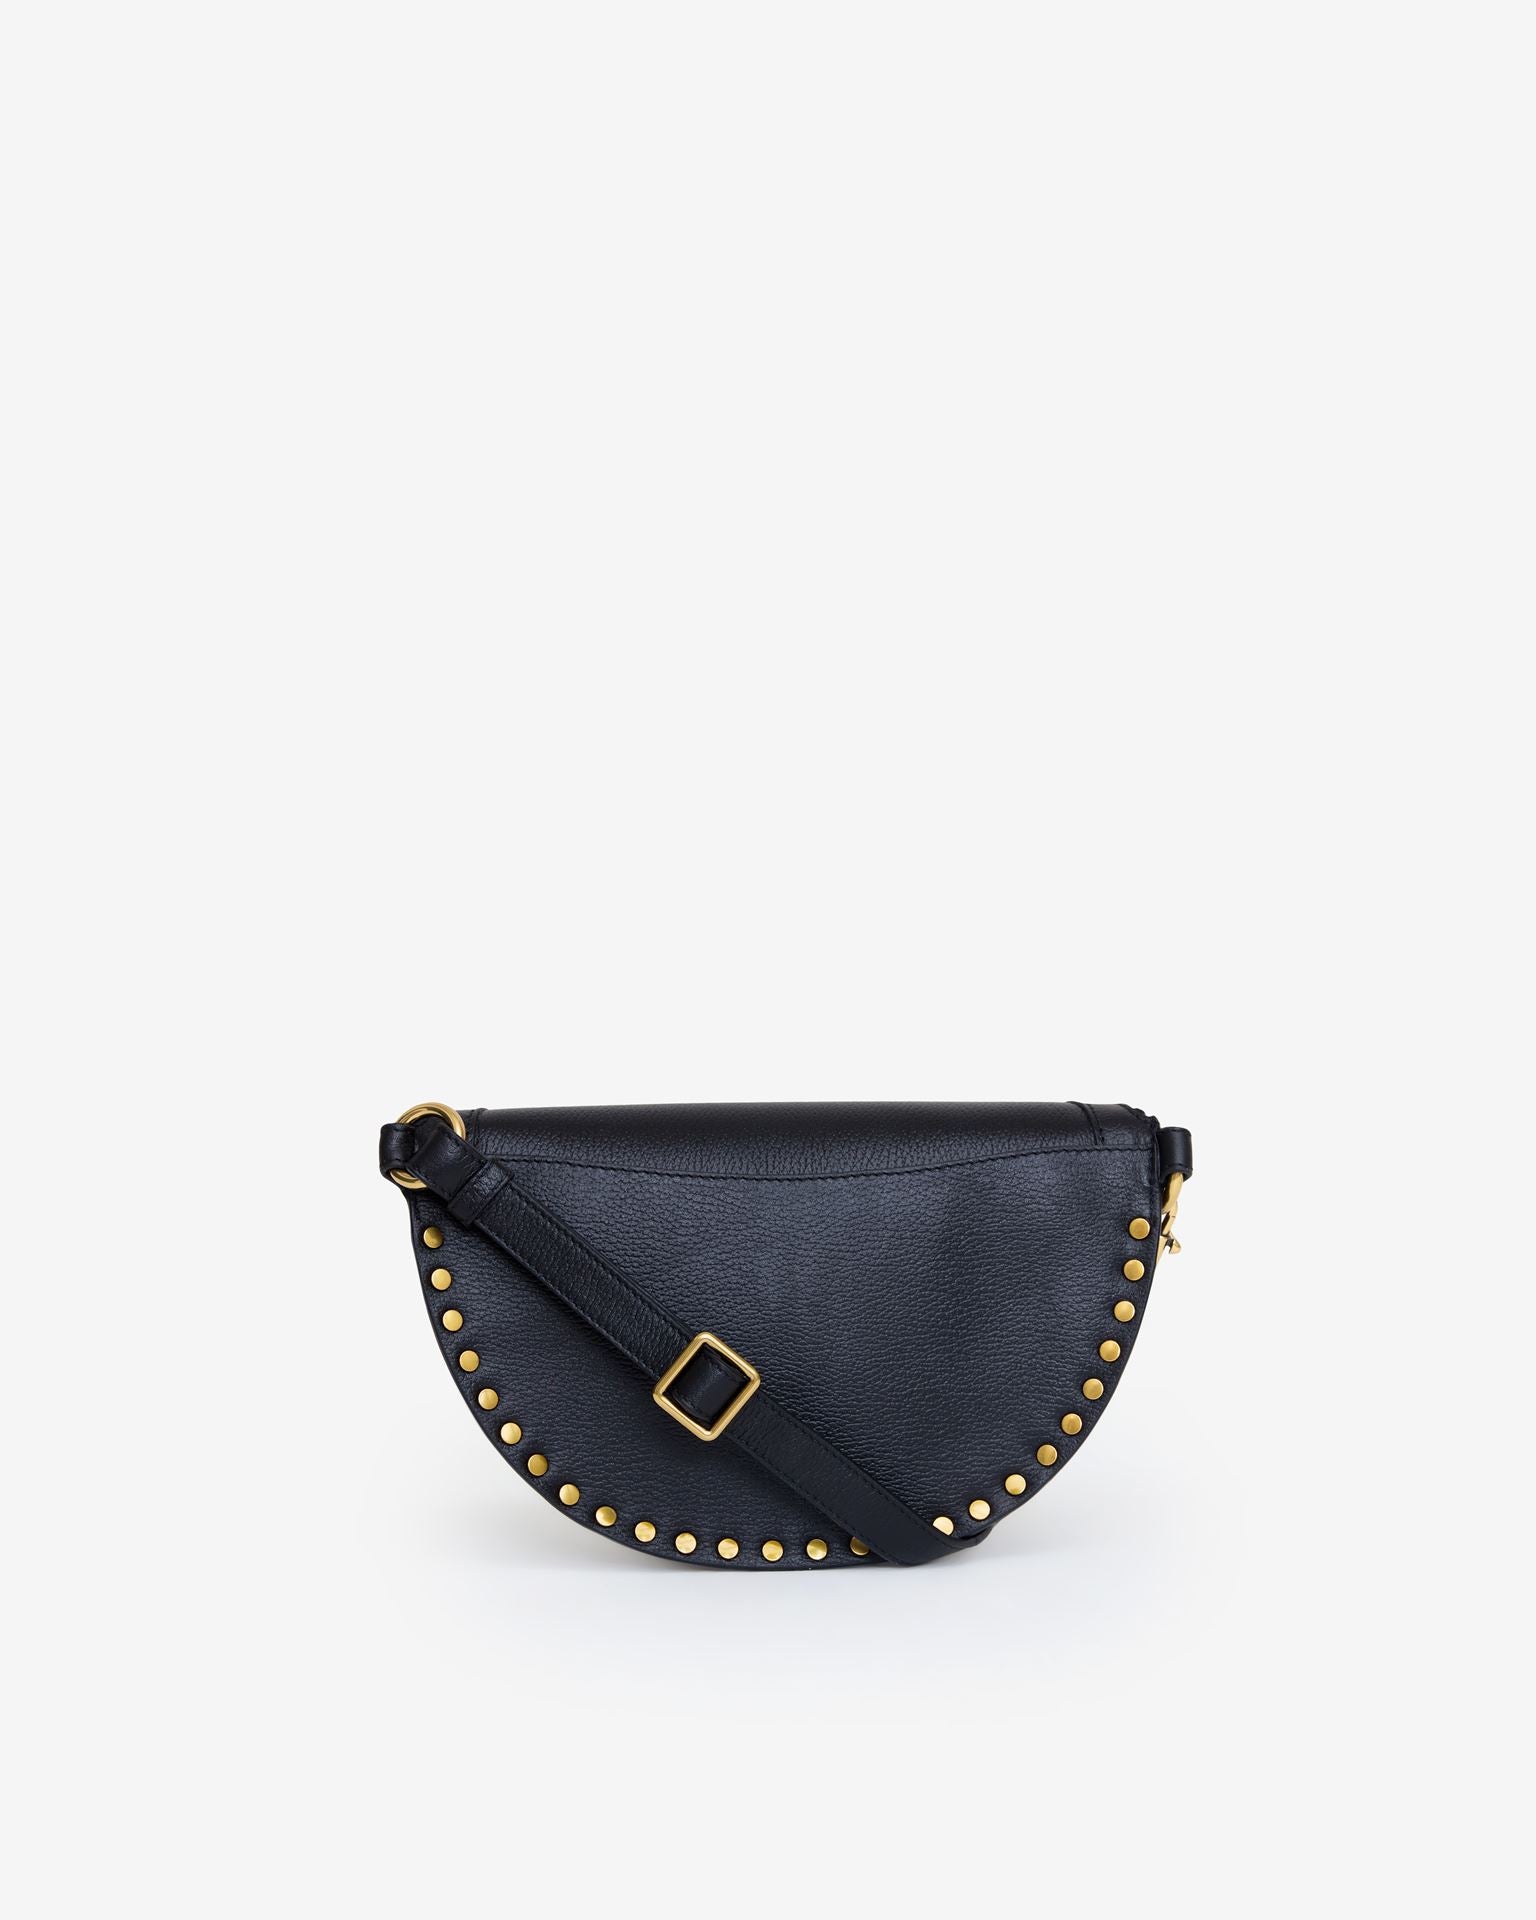 Skano Grained Leather Belt Bag in Black